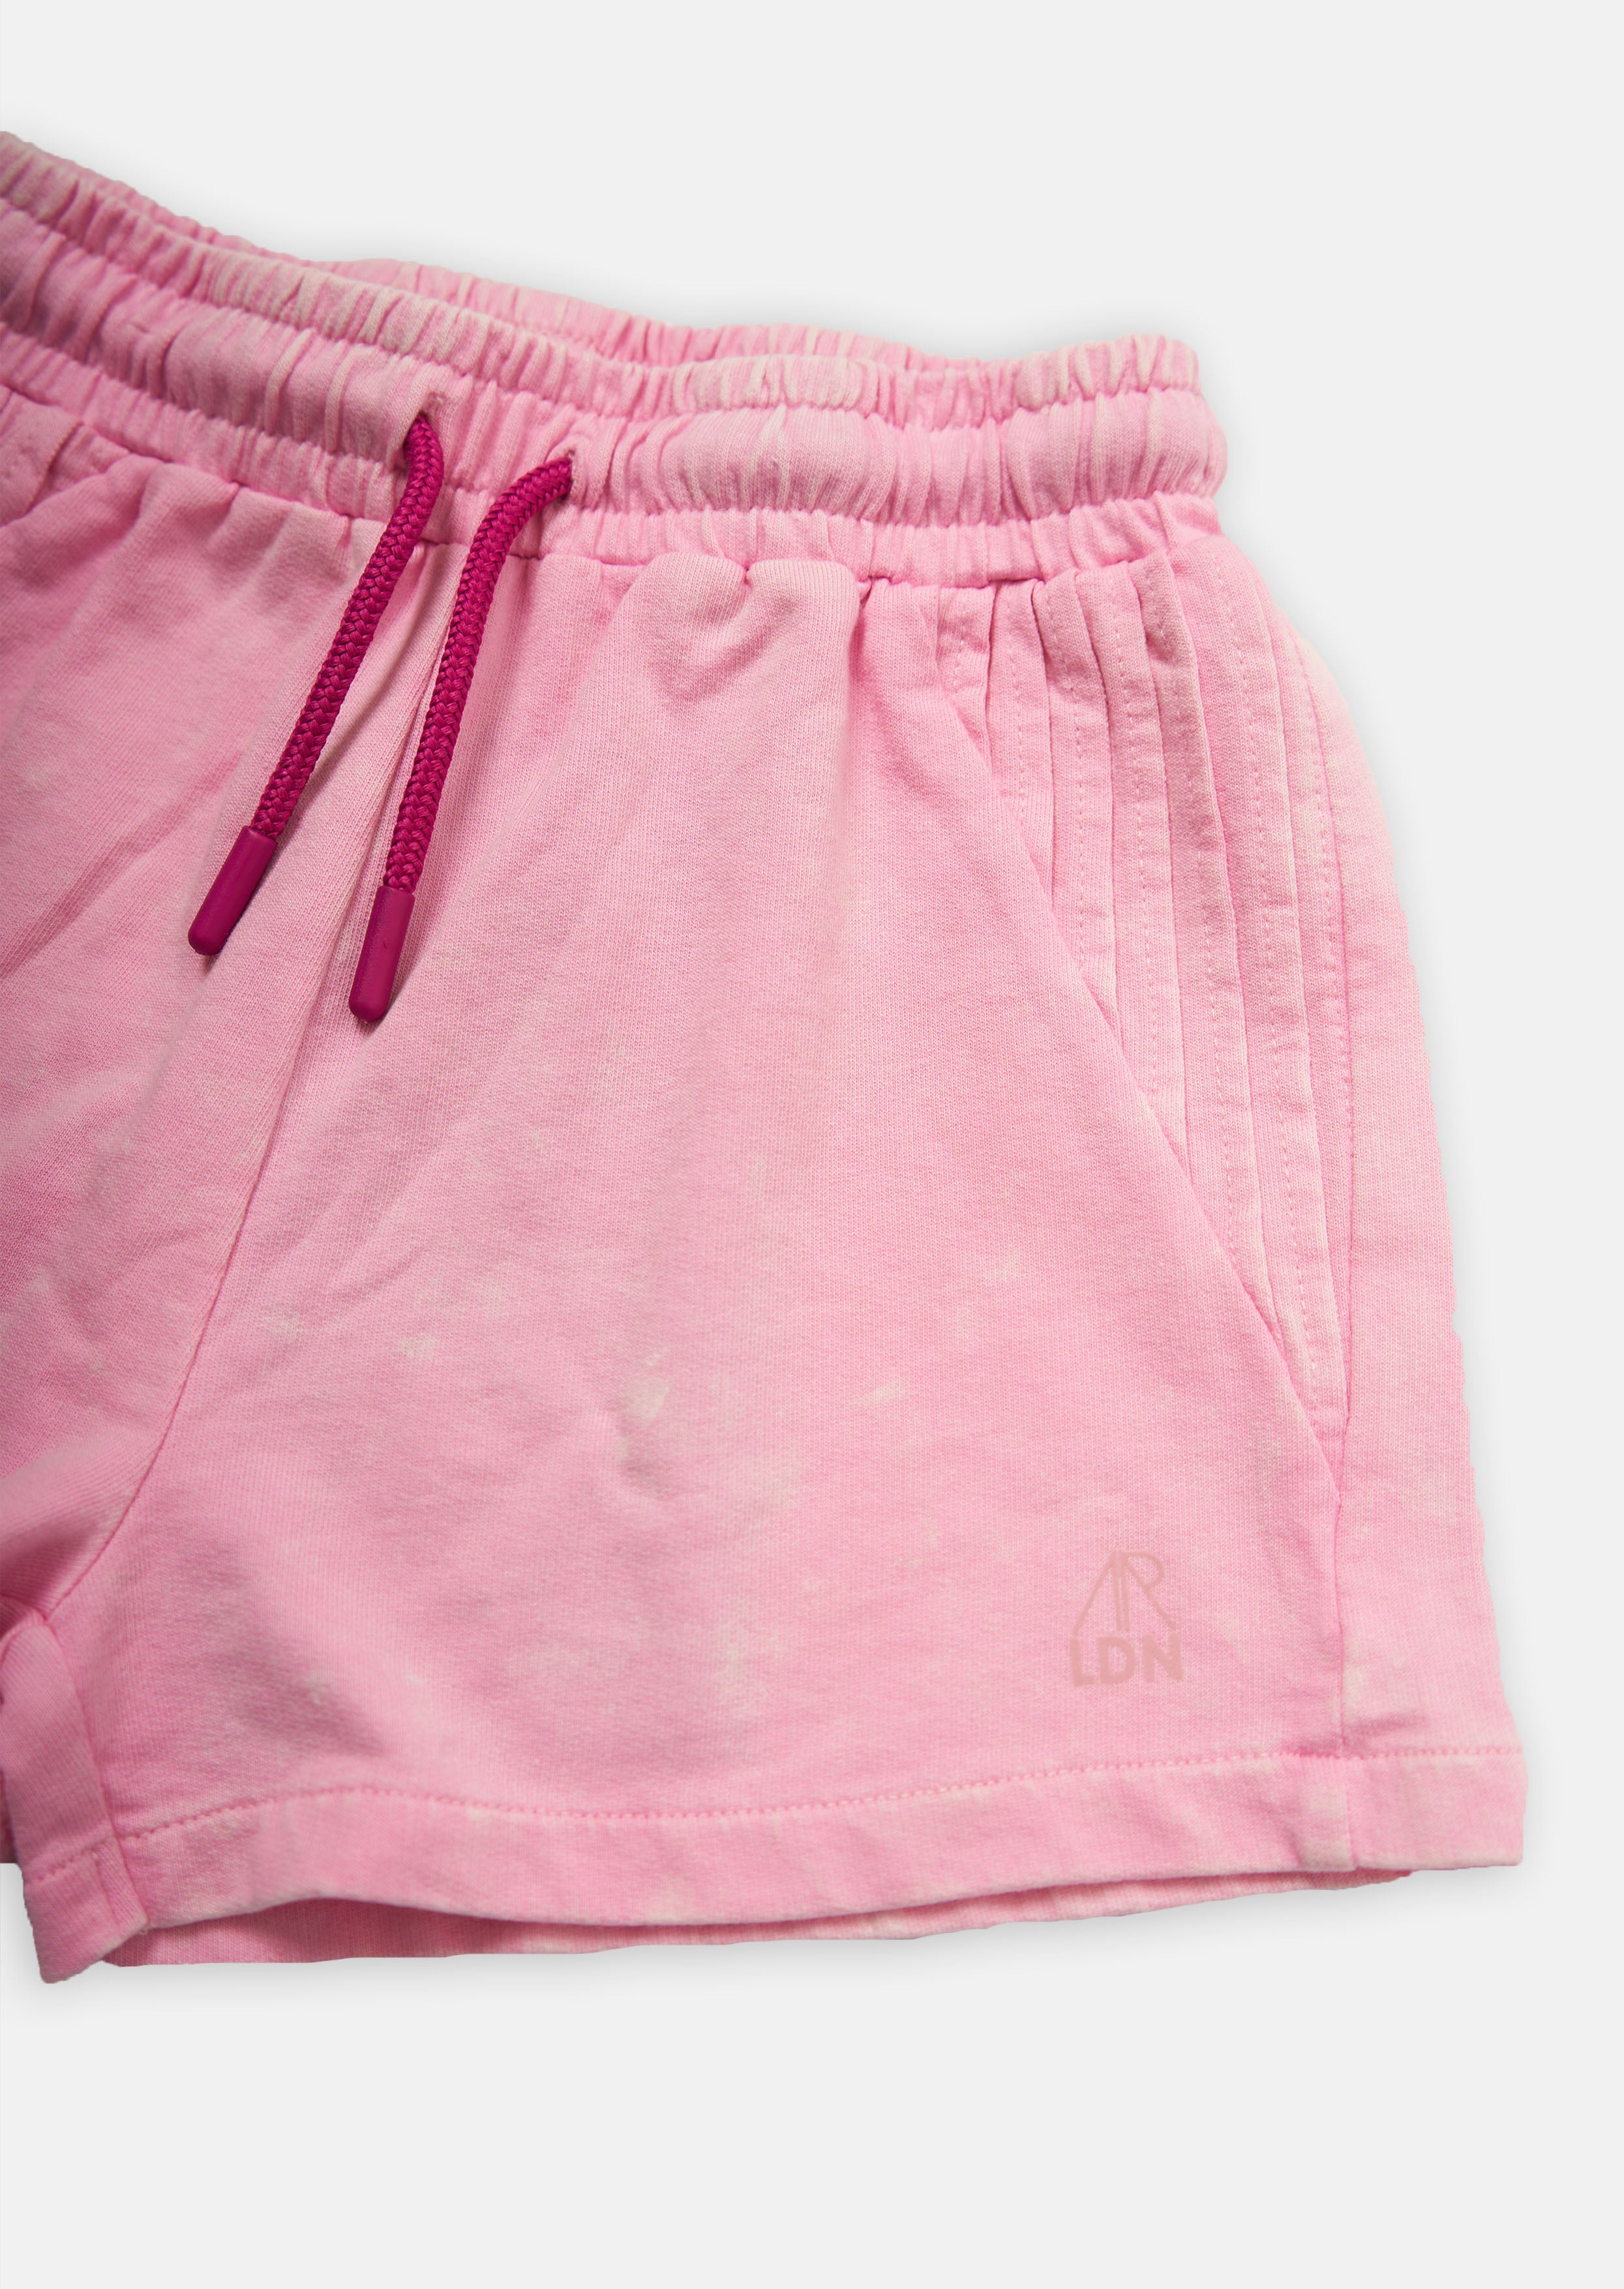 Girls Acid Wash Solid Pink Shorts